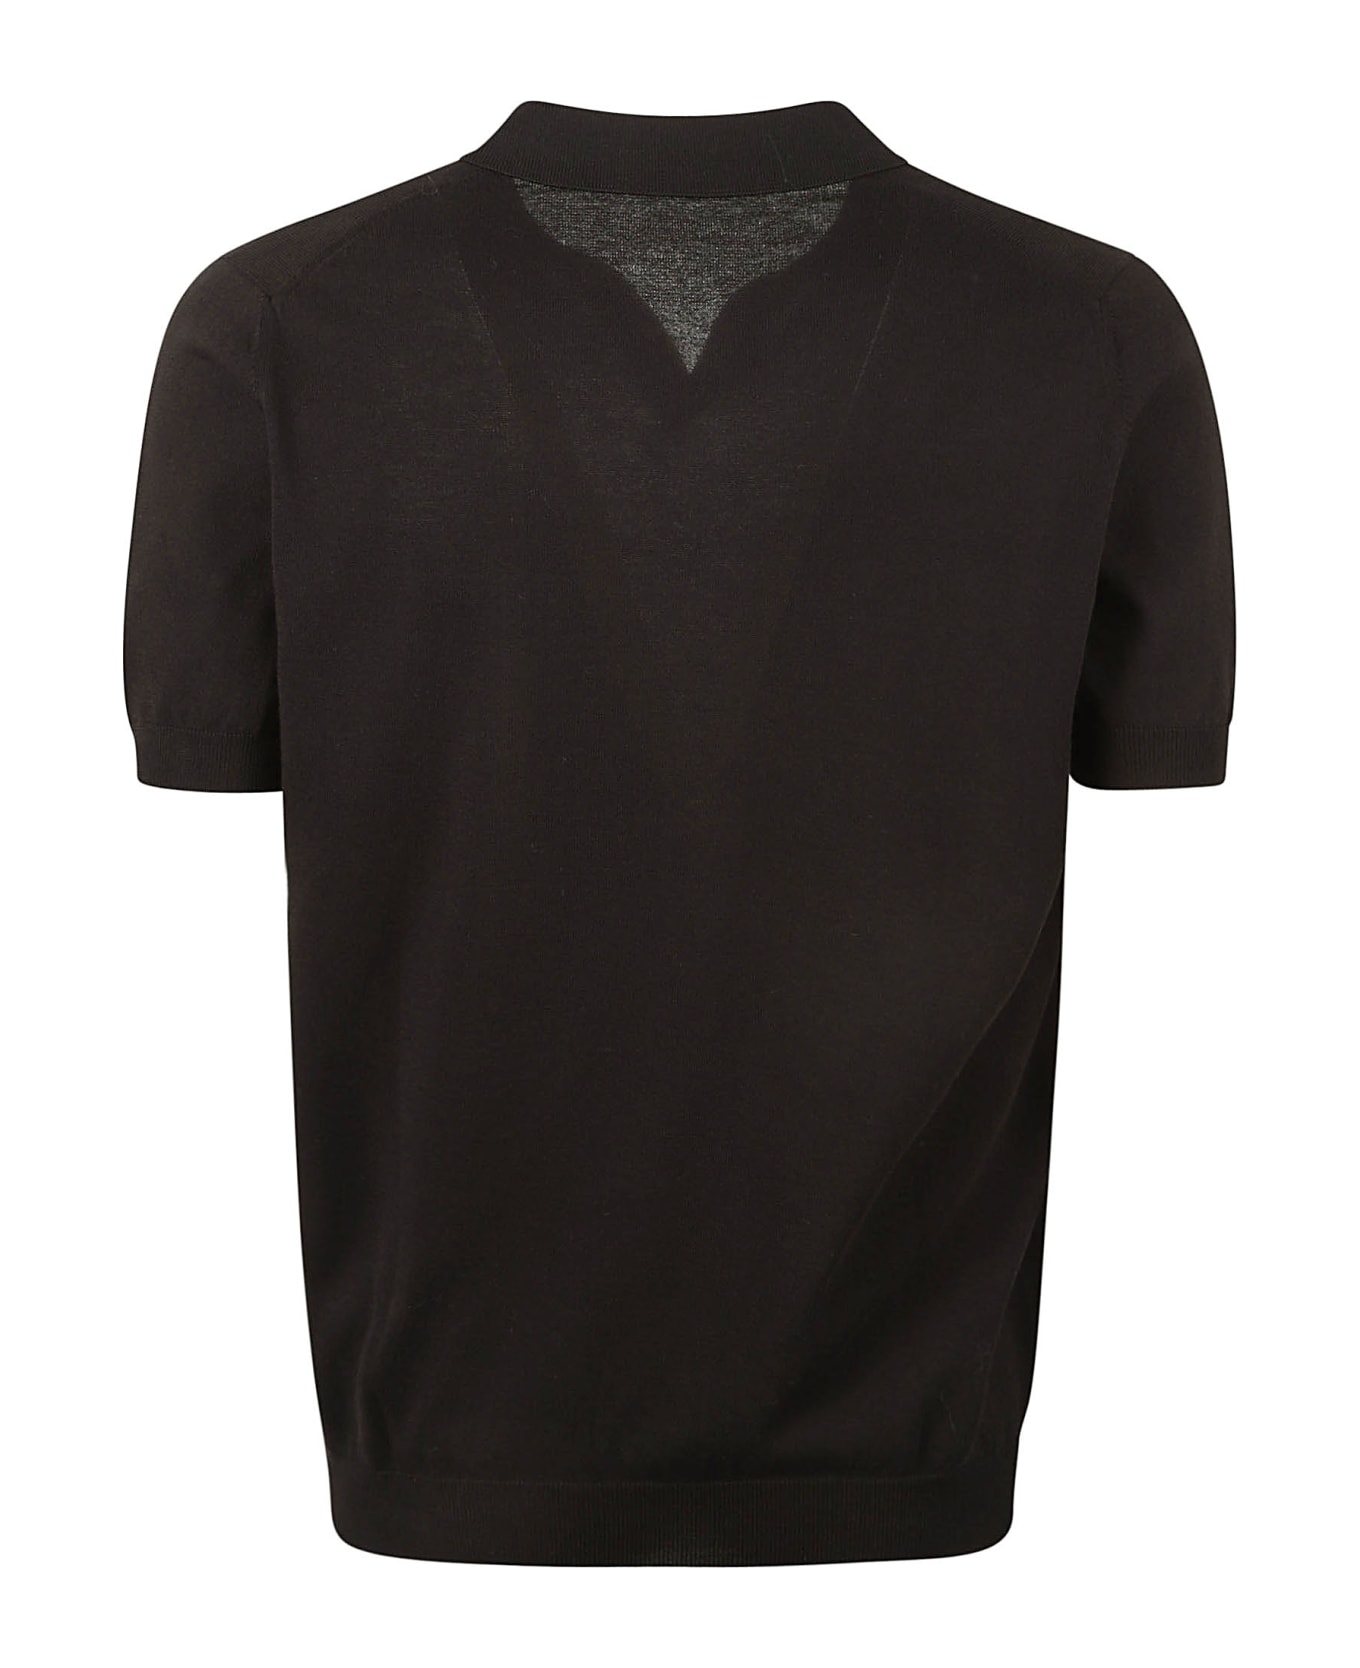 Tagliatore Button-less Placket Polo Shirt - Black